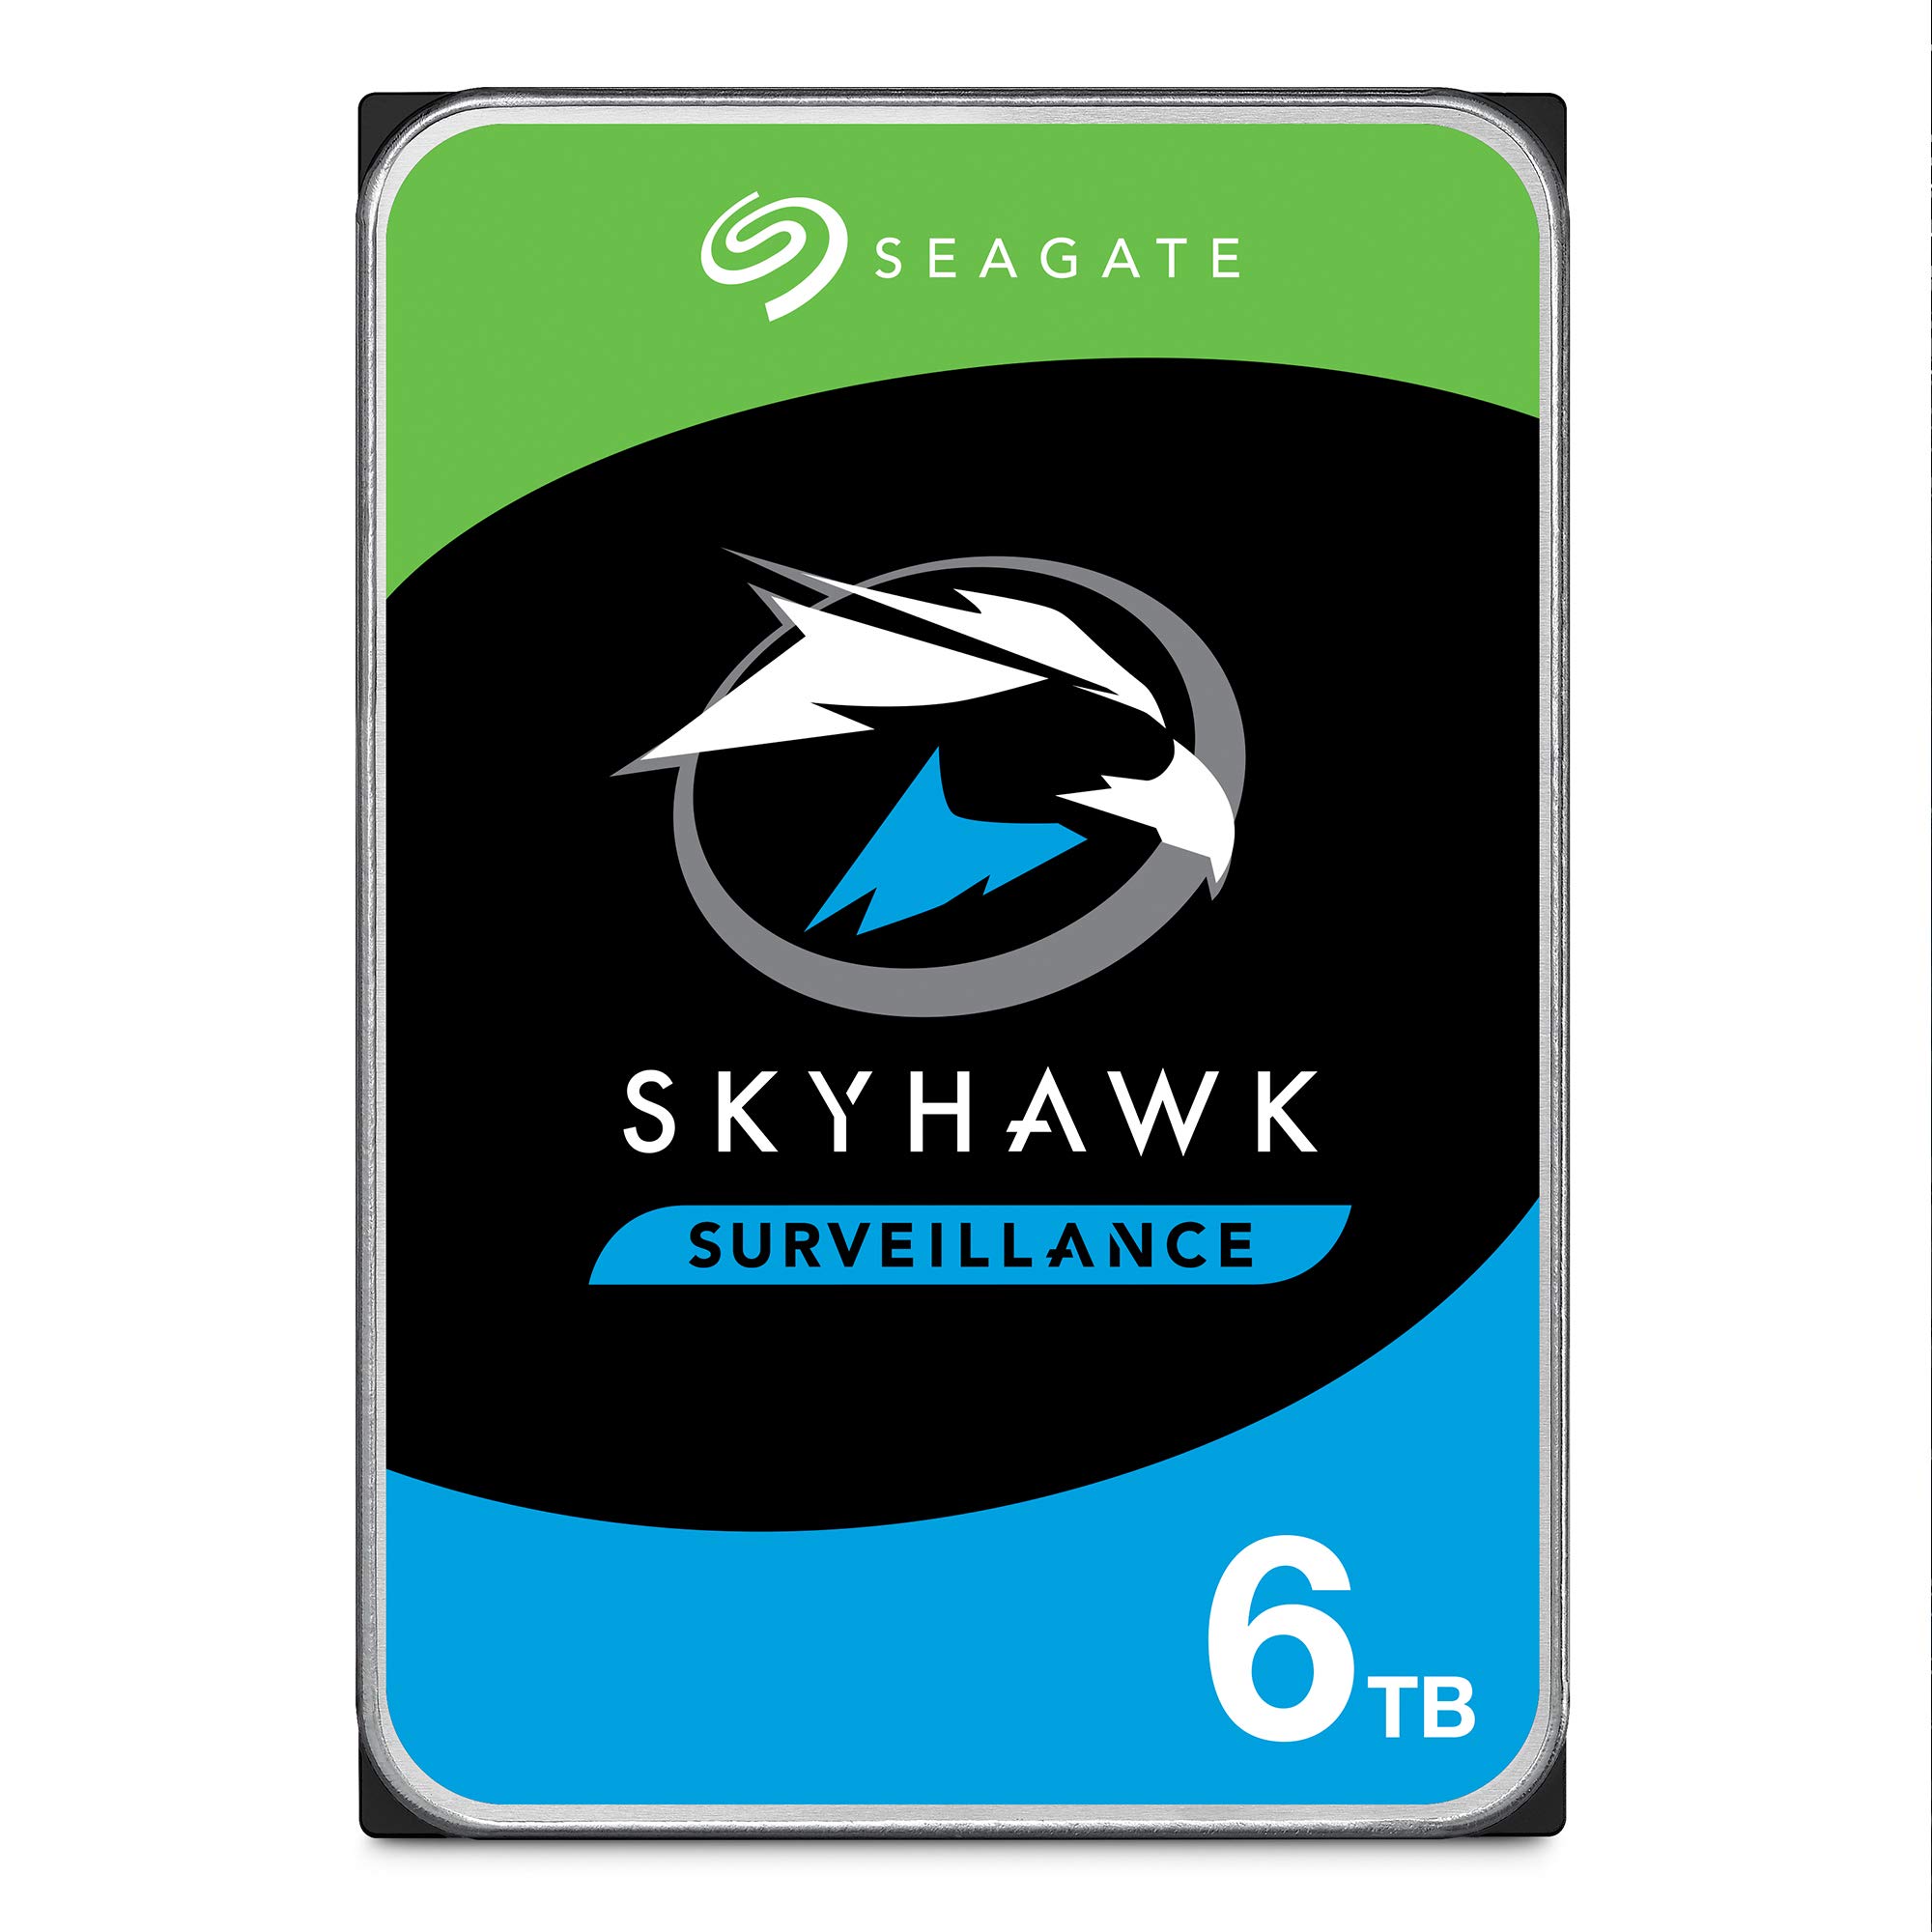 Seagate SkyHawk 6TB Surveillance Internal Hard Drive HDD 3.5 Inch SATA 6GBs 256MB Cache for DVR NVR Security Camera Syst